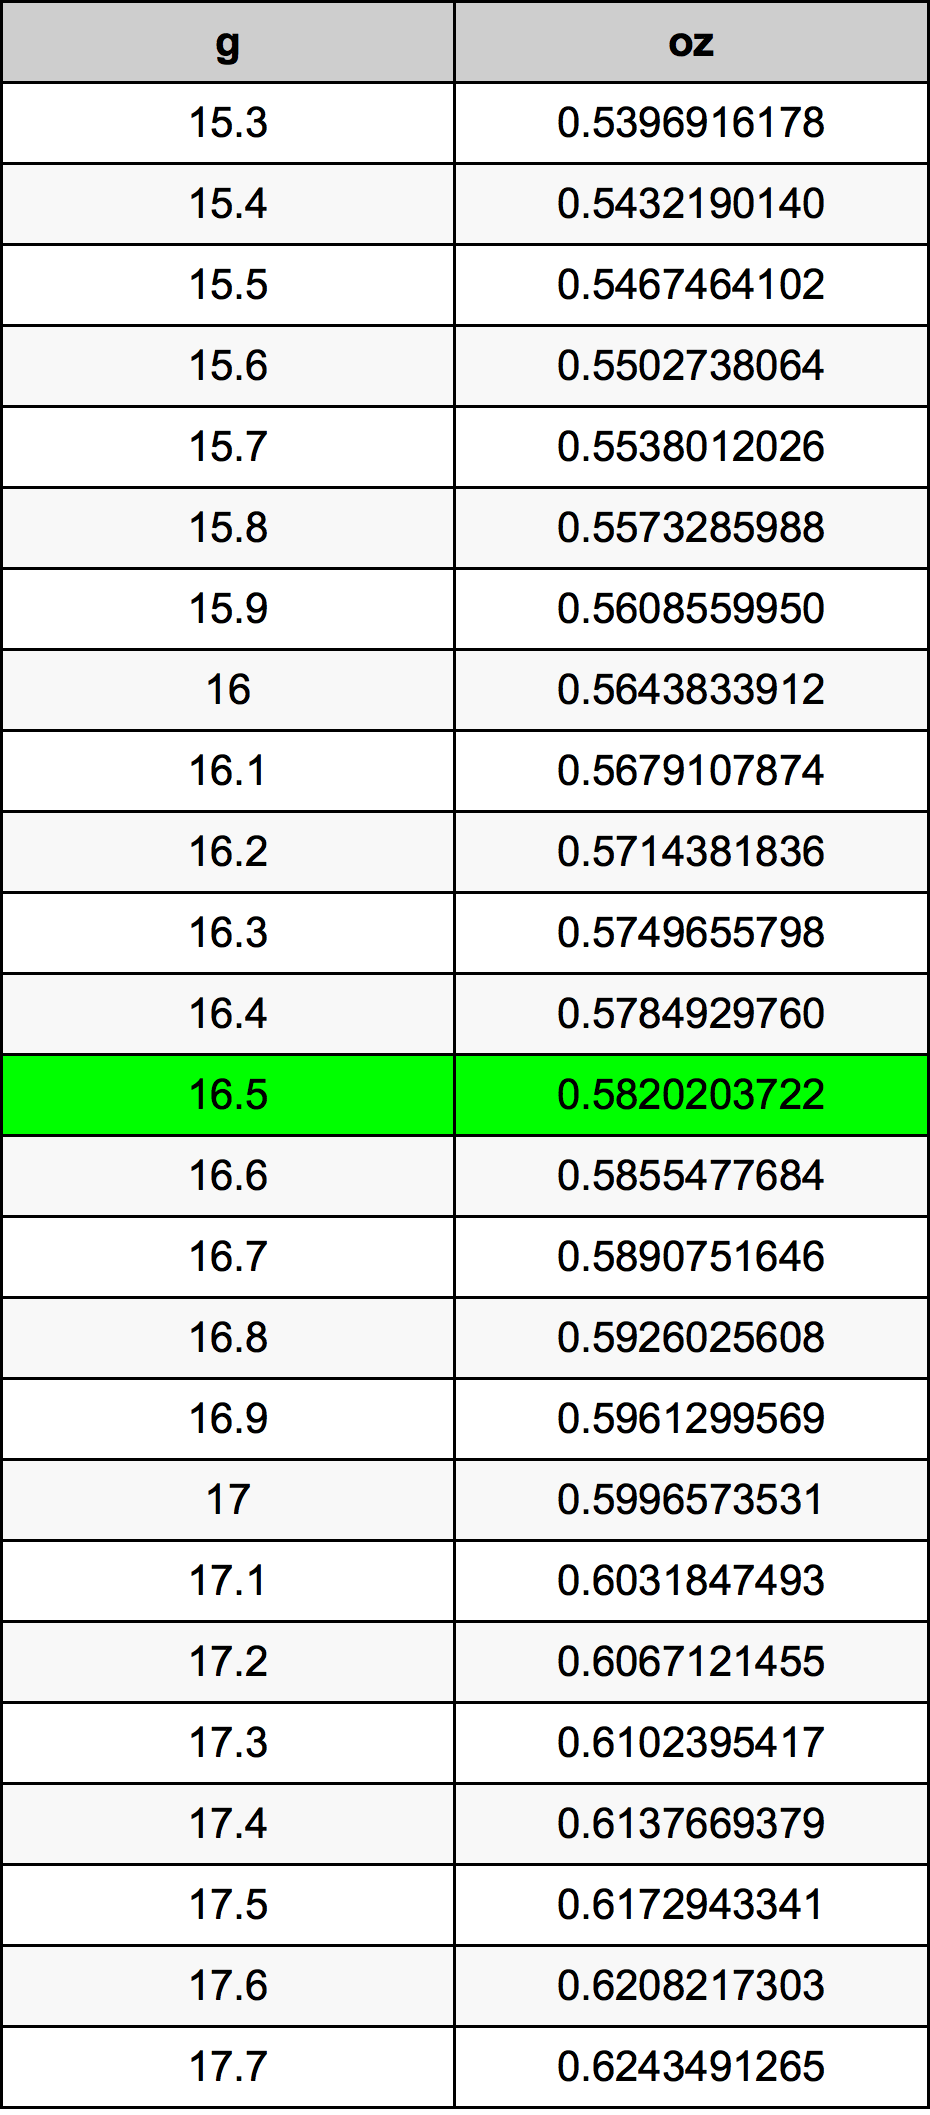 16.5 غرام جدول تحويل